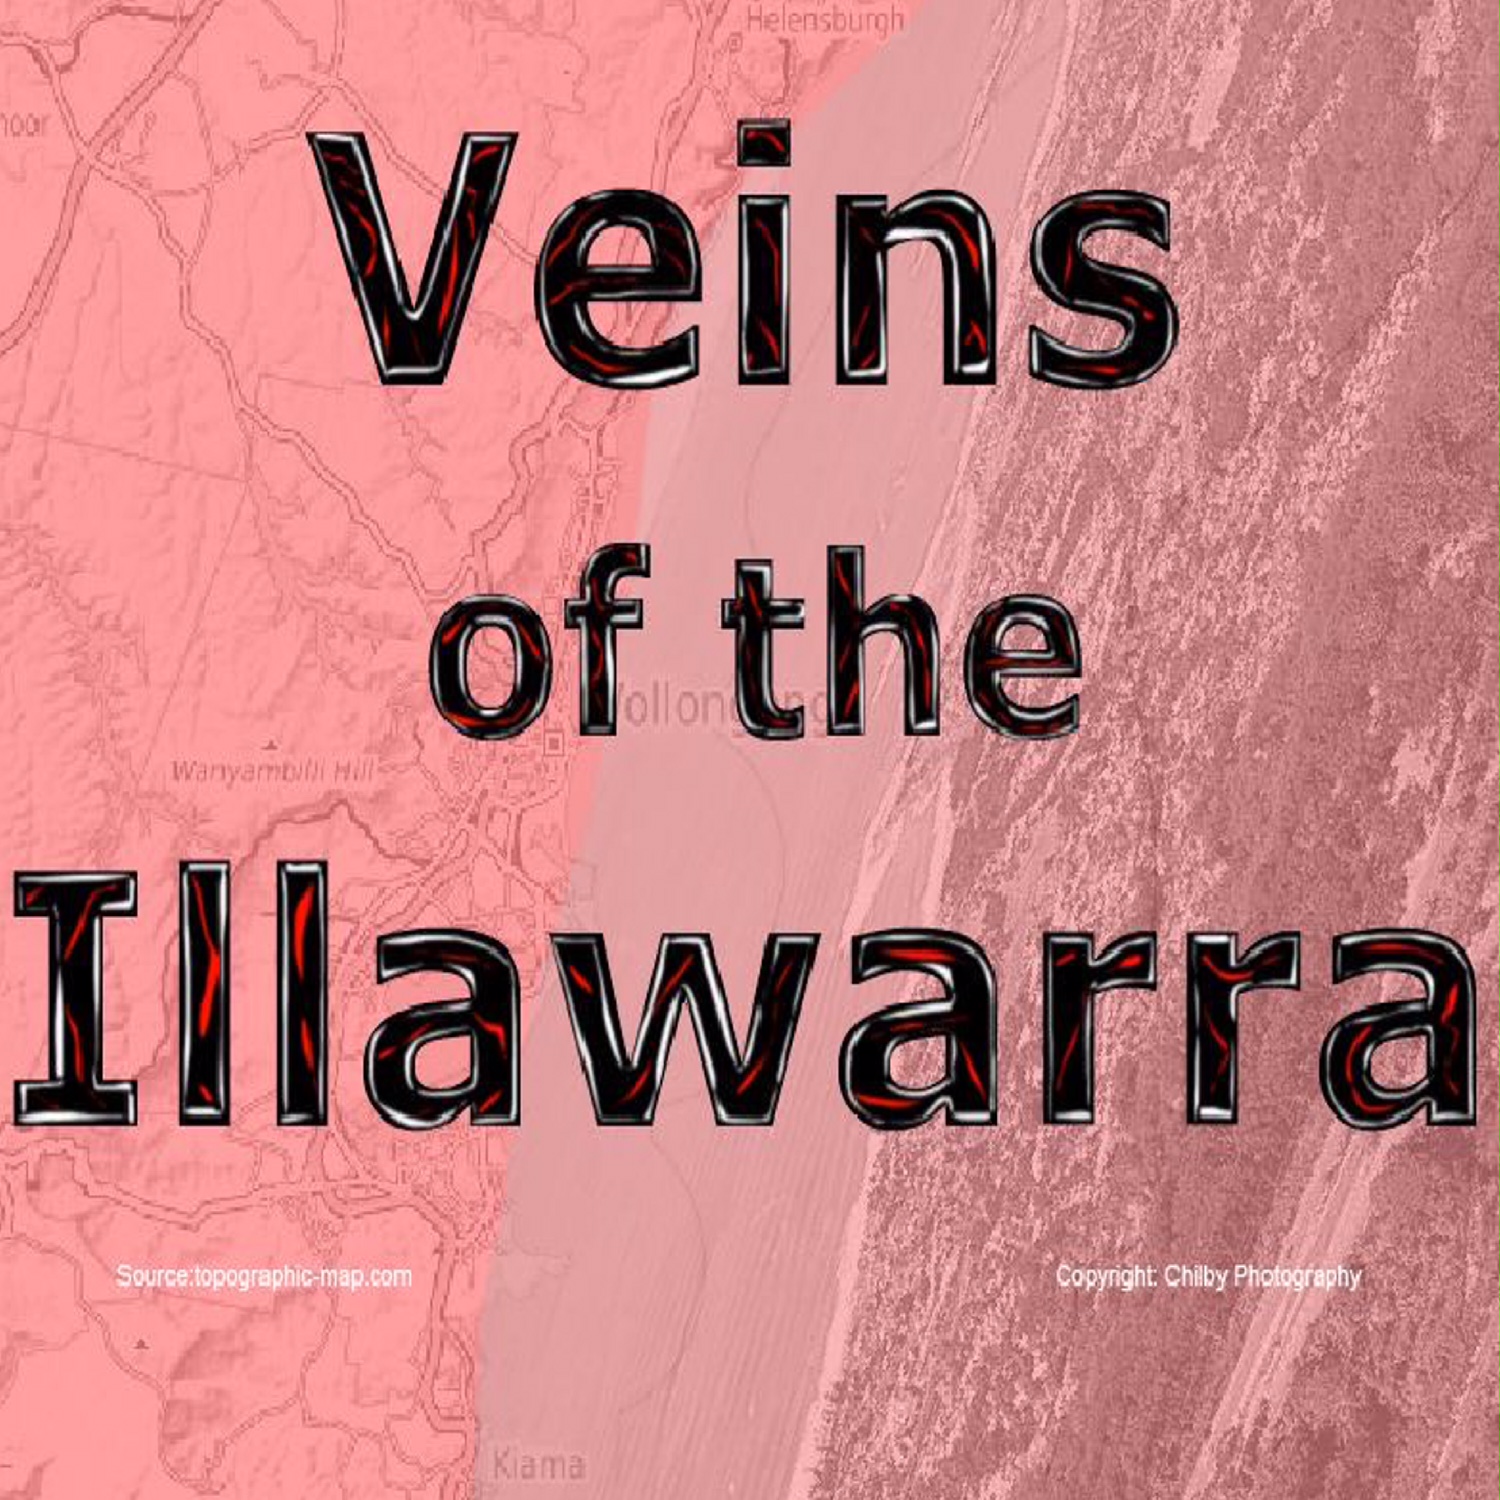 Artwork for Veins of the Illawarra